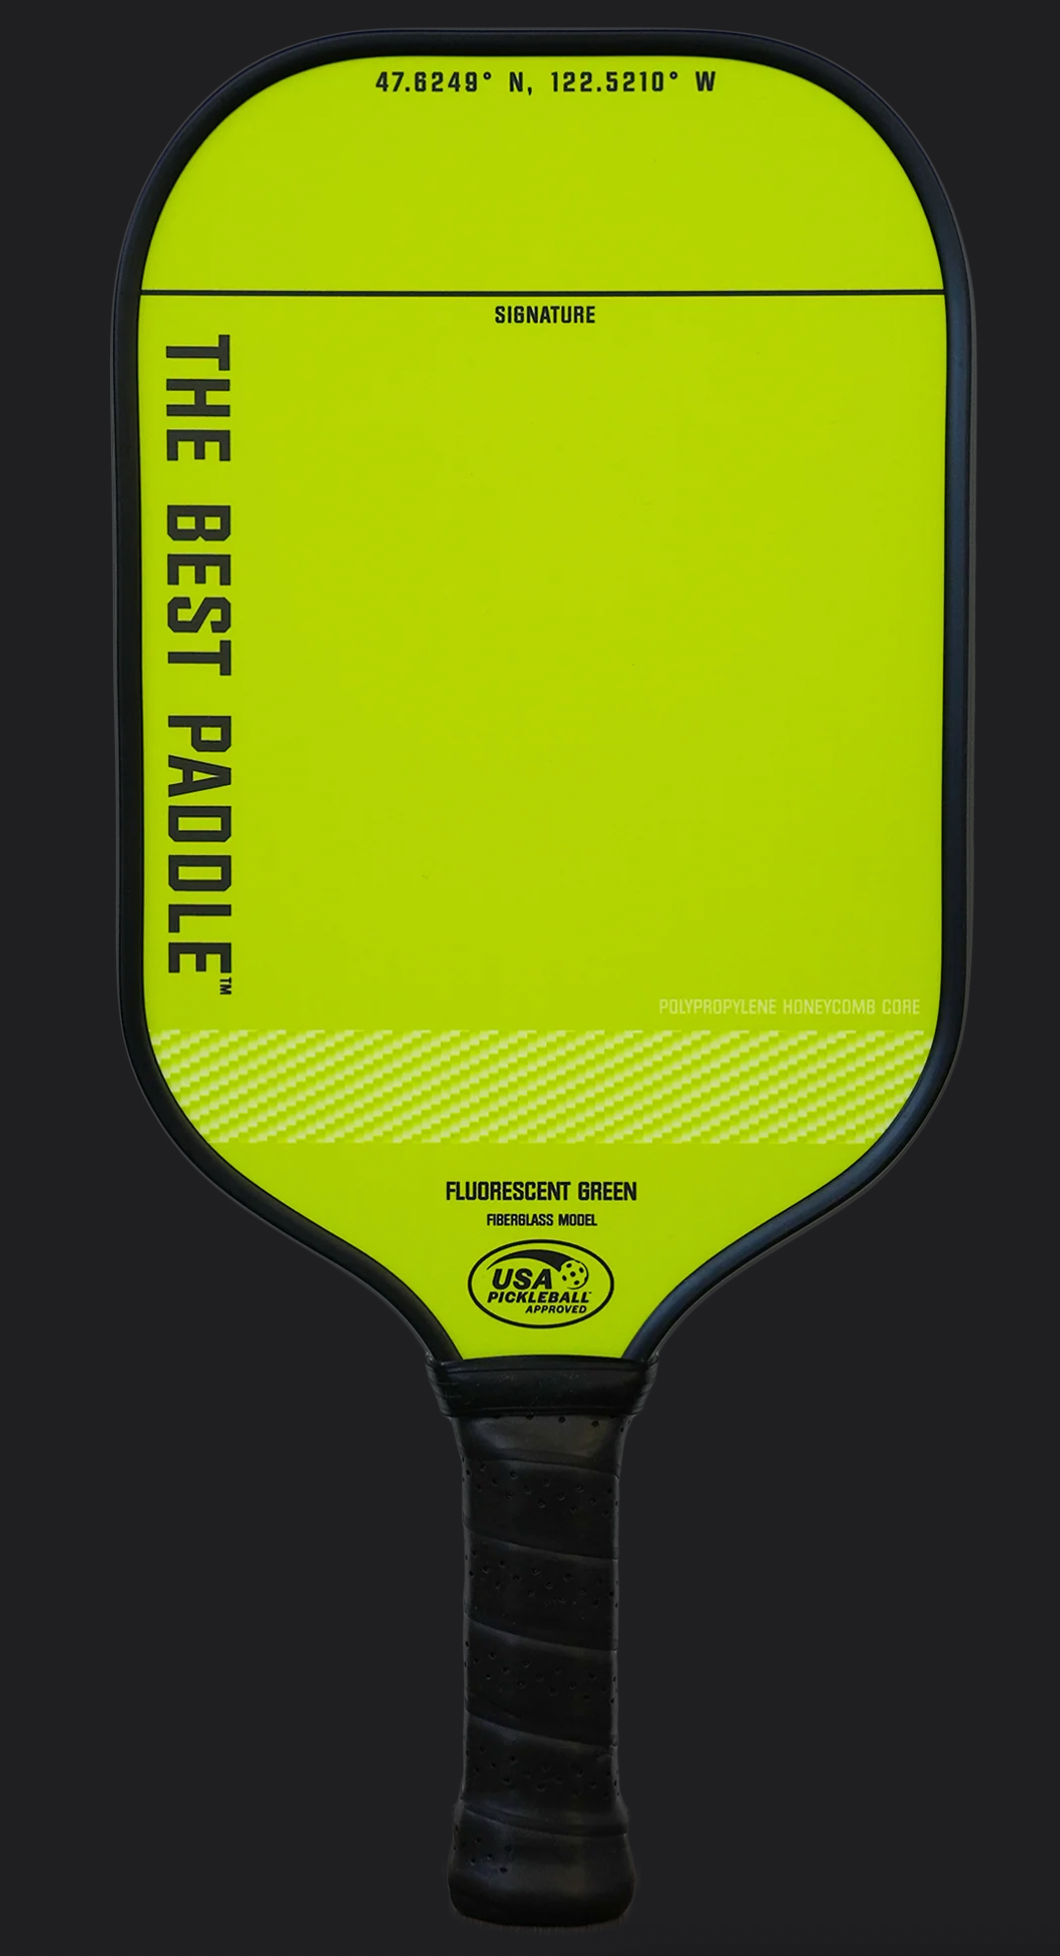 The Best Paddle Fluorescent Green Fiberglass Paddle